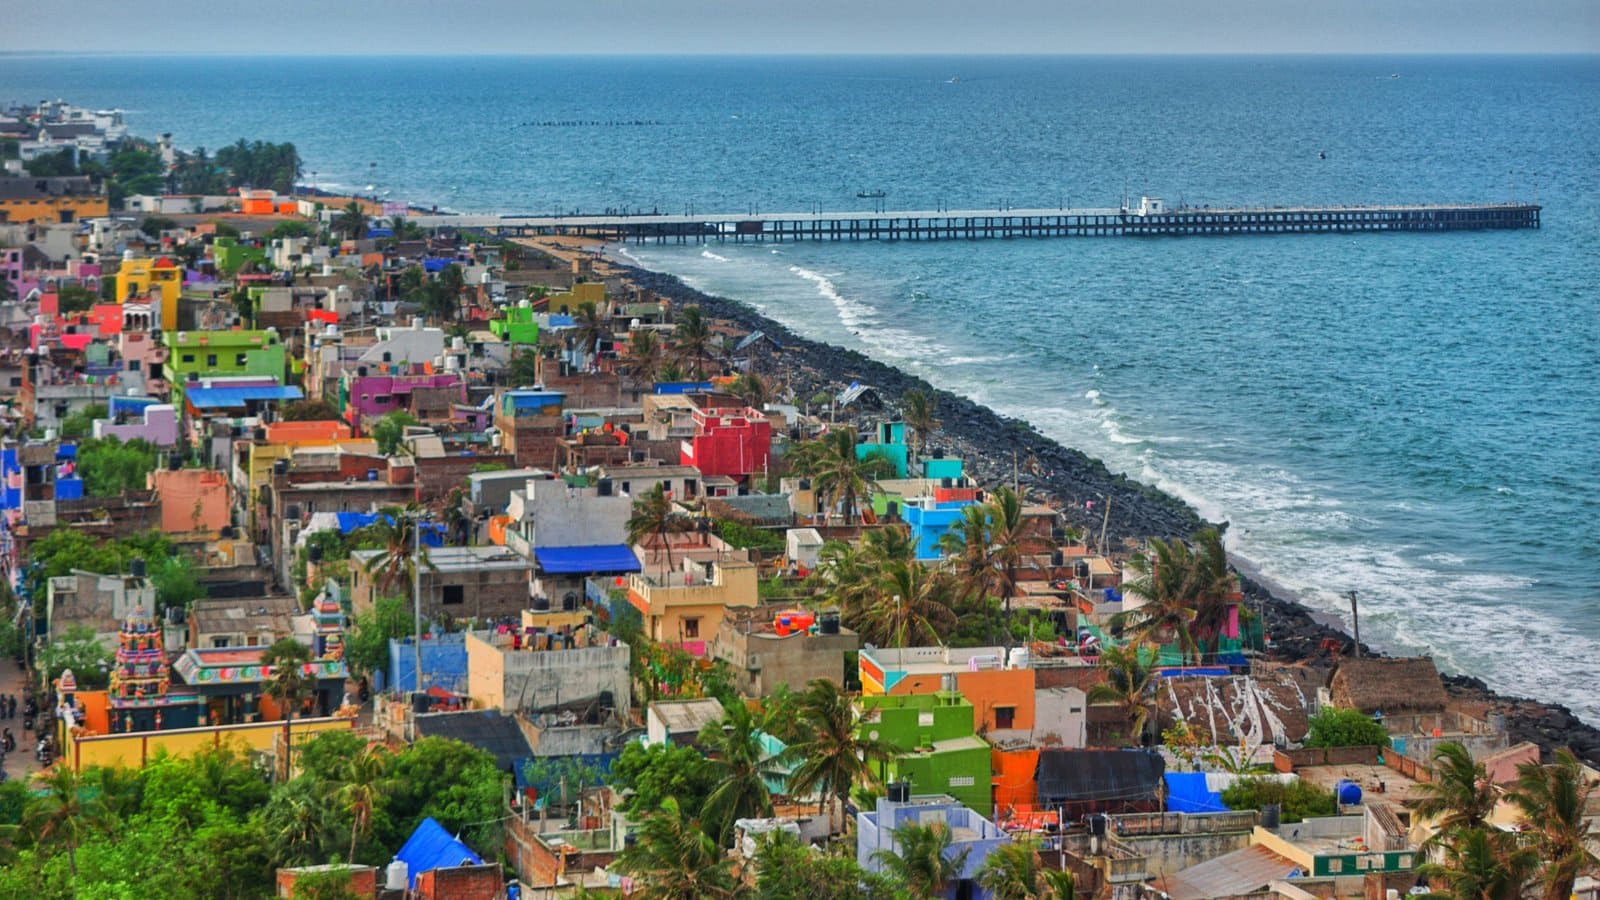 Pondicherry: A Blend of Cultures